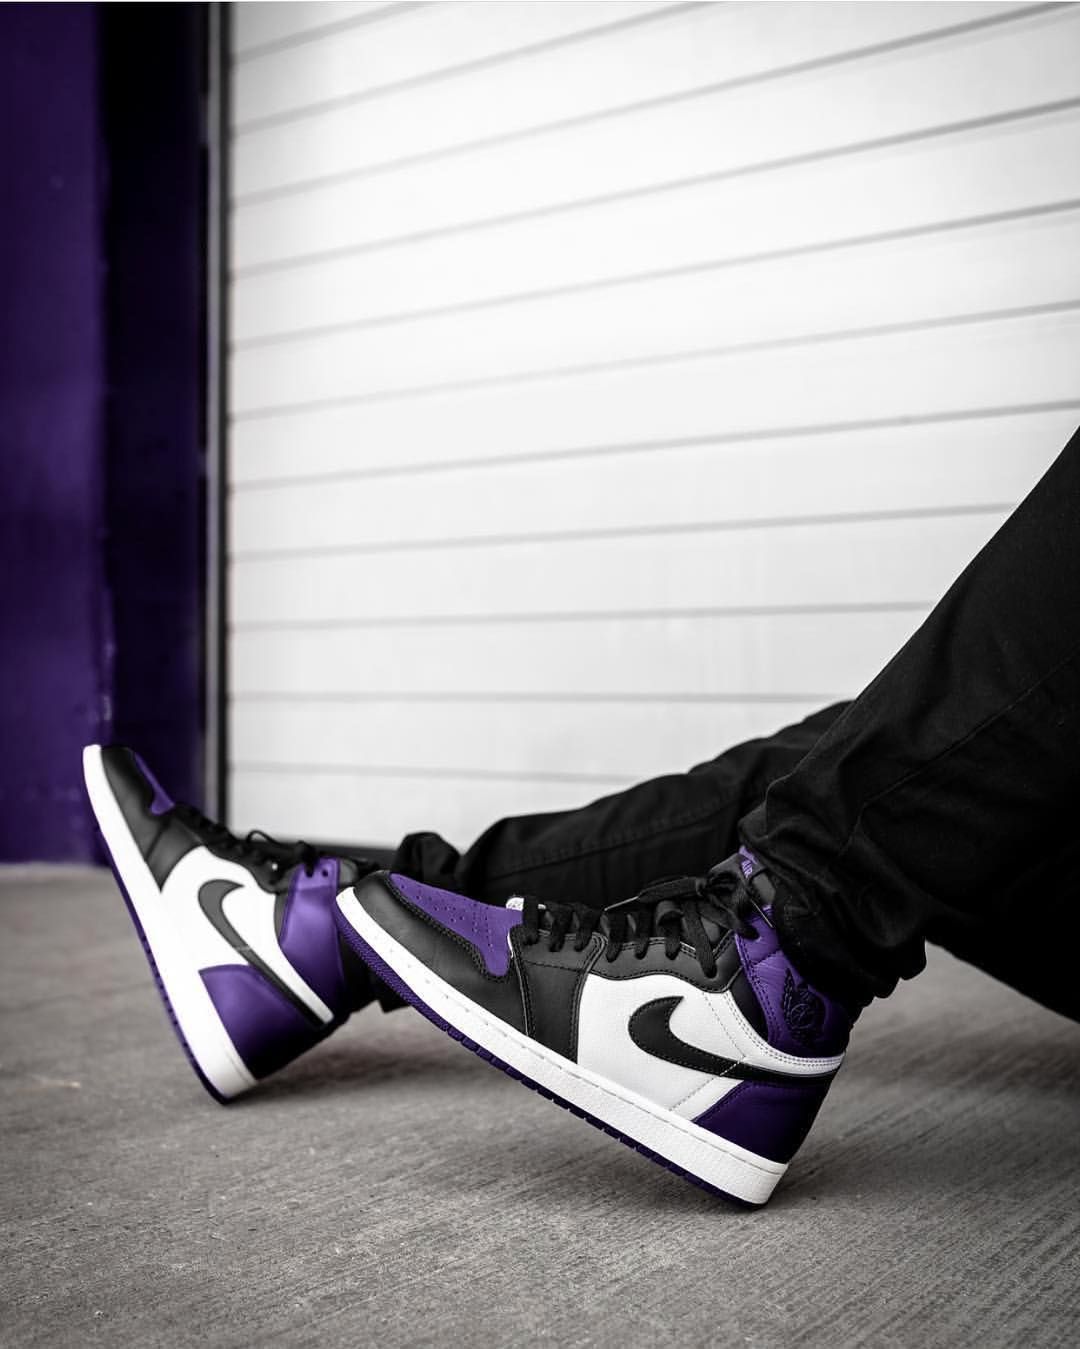 Purple Jordan 1 Wallpapers